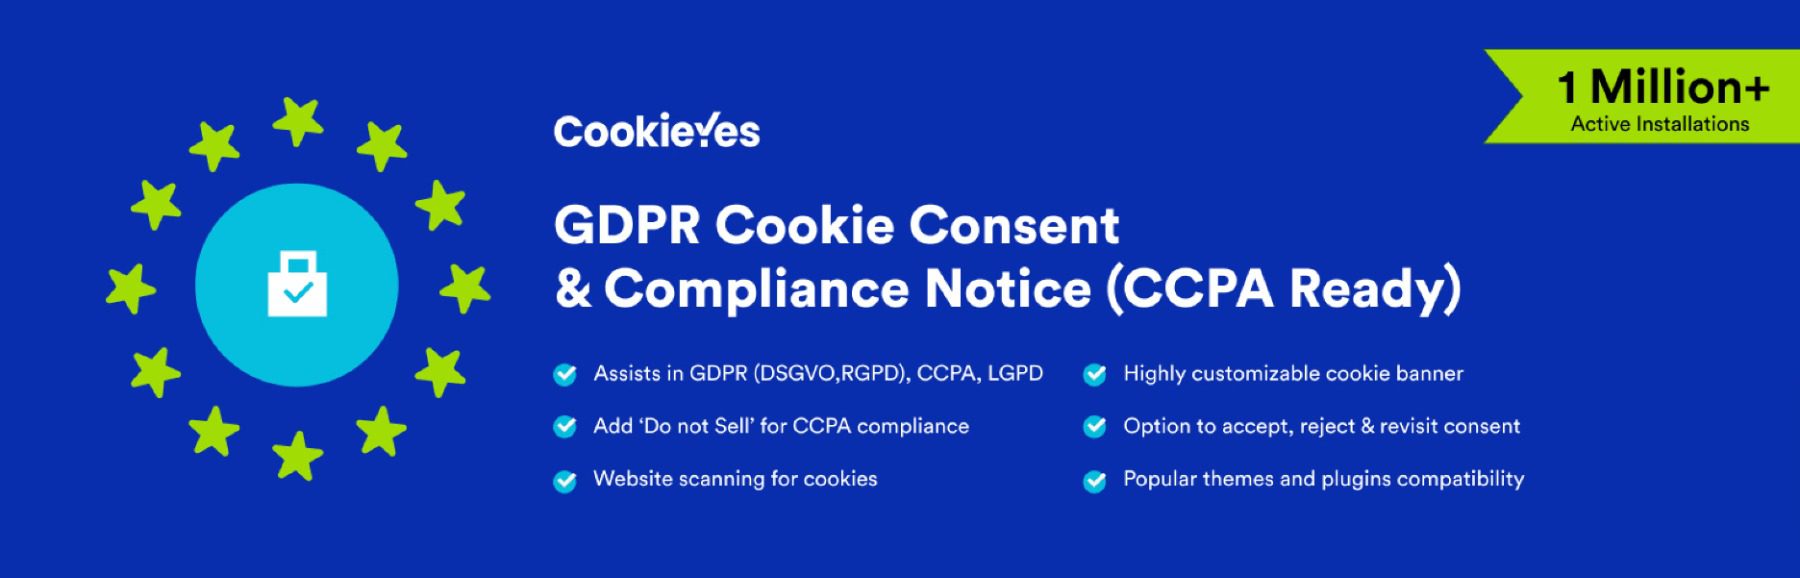 CookieYes Logo Banner